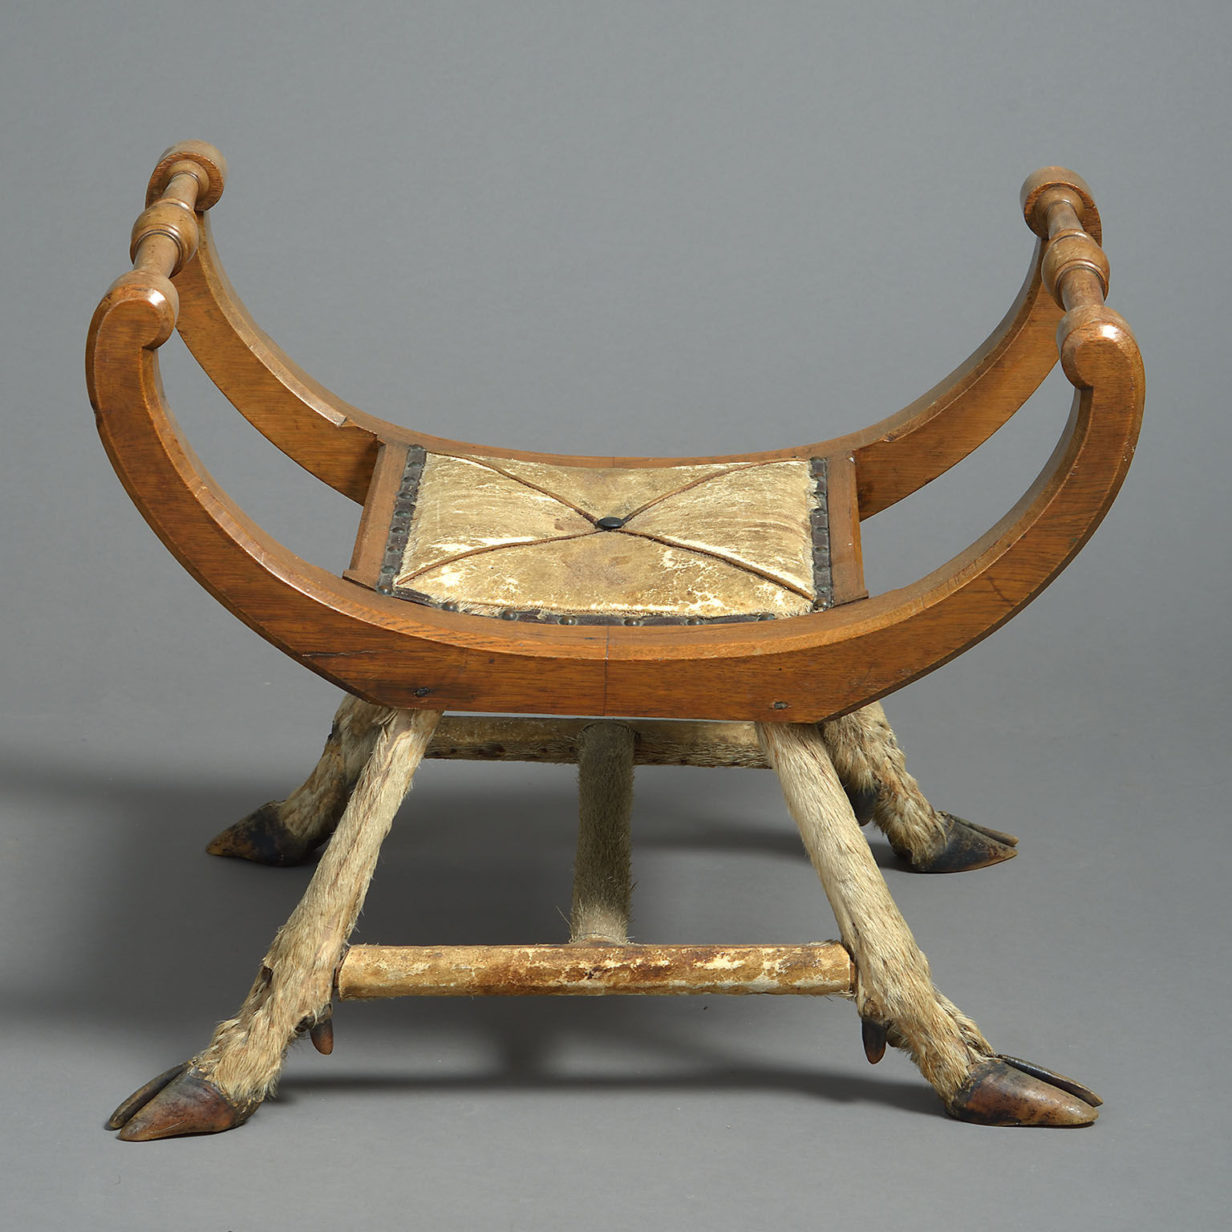 19th century walnut & taxidermy stool